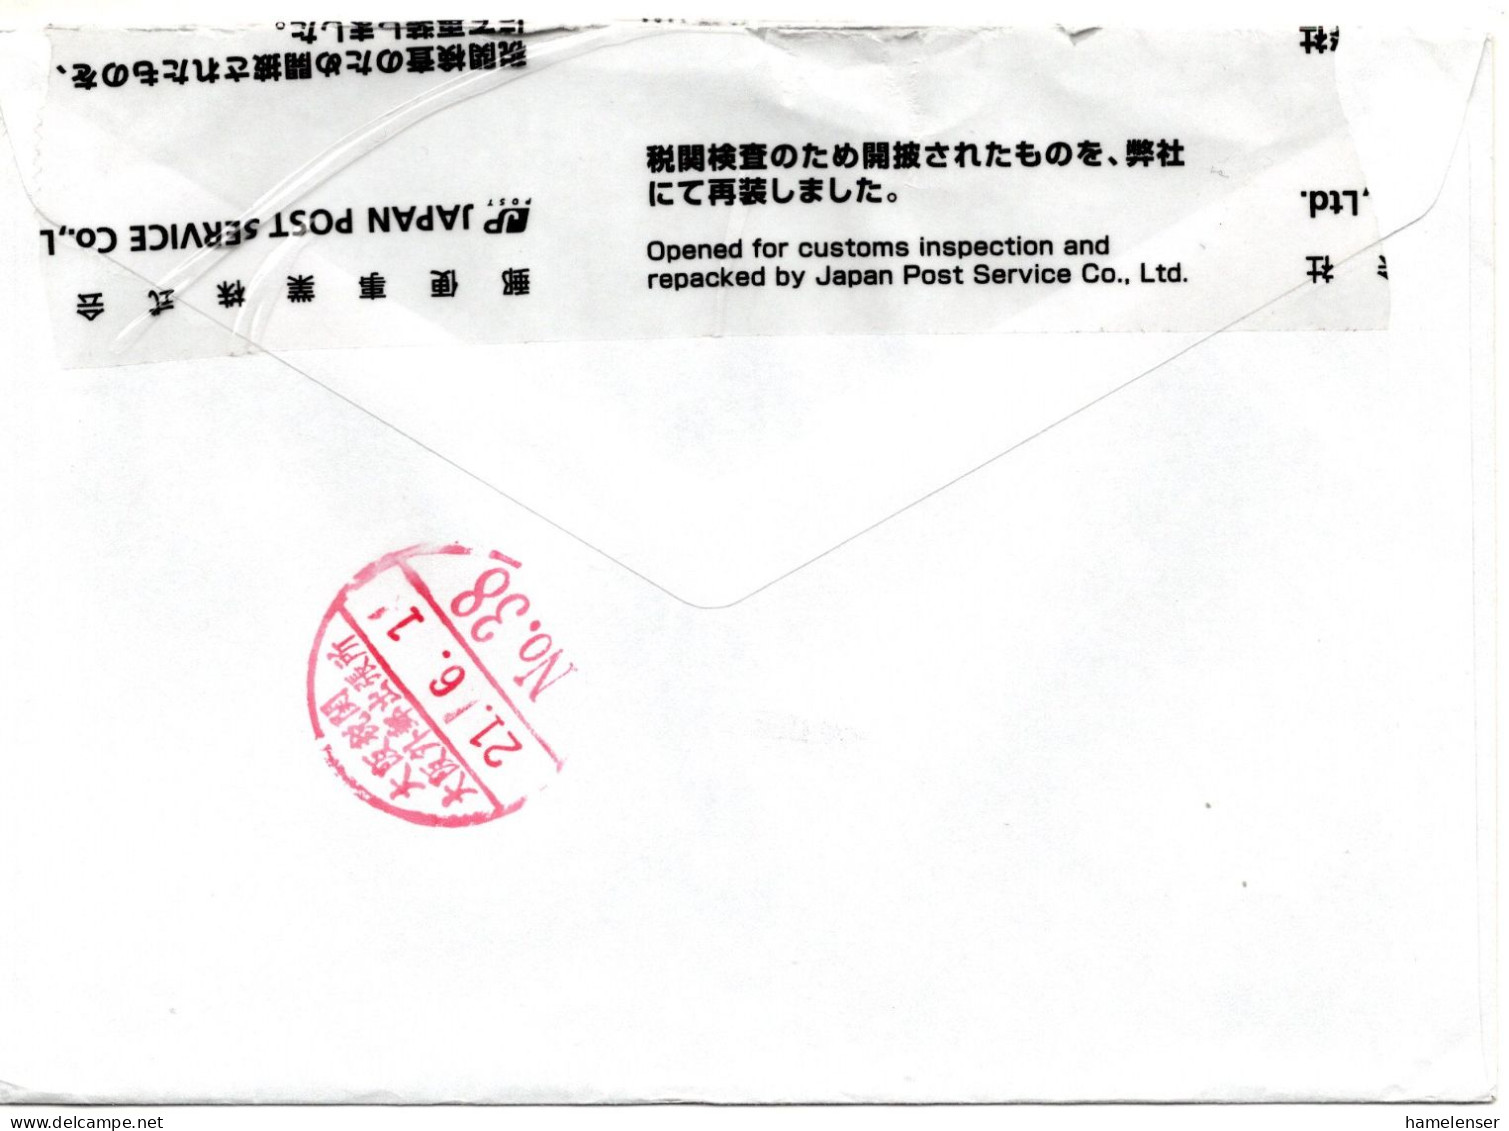 66006 - Niederlande - 2009 - MiF A LpBf Nach Japan, M Niederl Portokontrolle & Japan Zollkontrolle V Zollamt Osaka - Cartas & Documentos